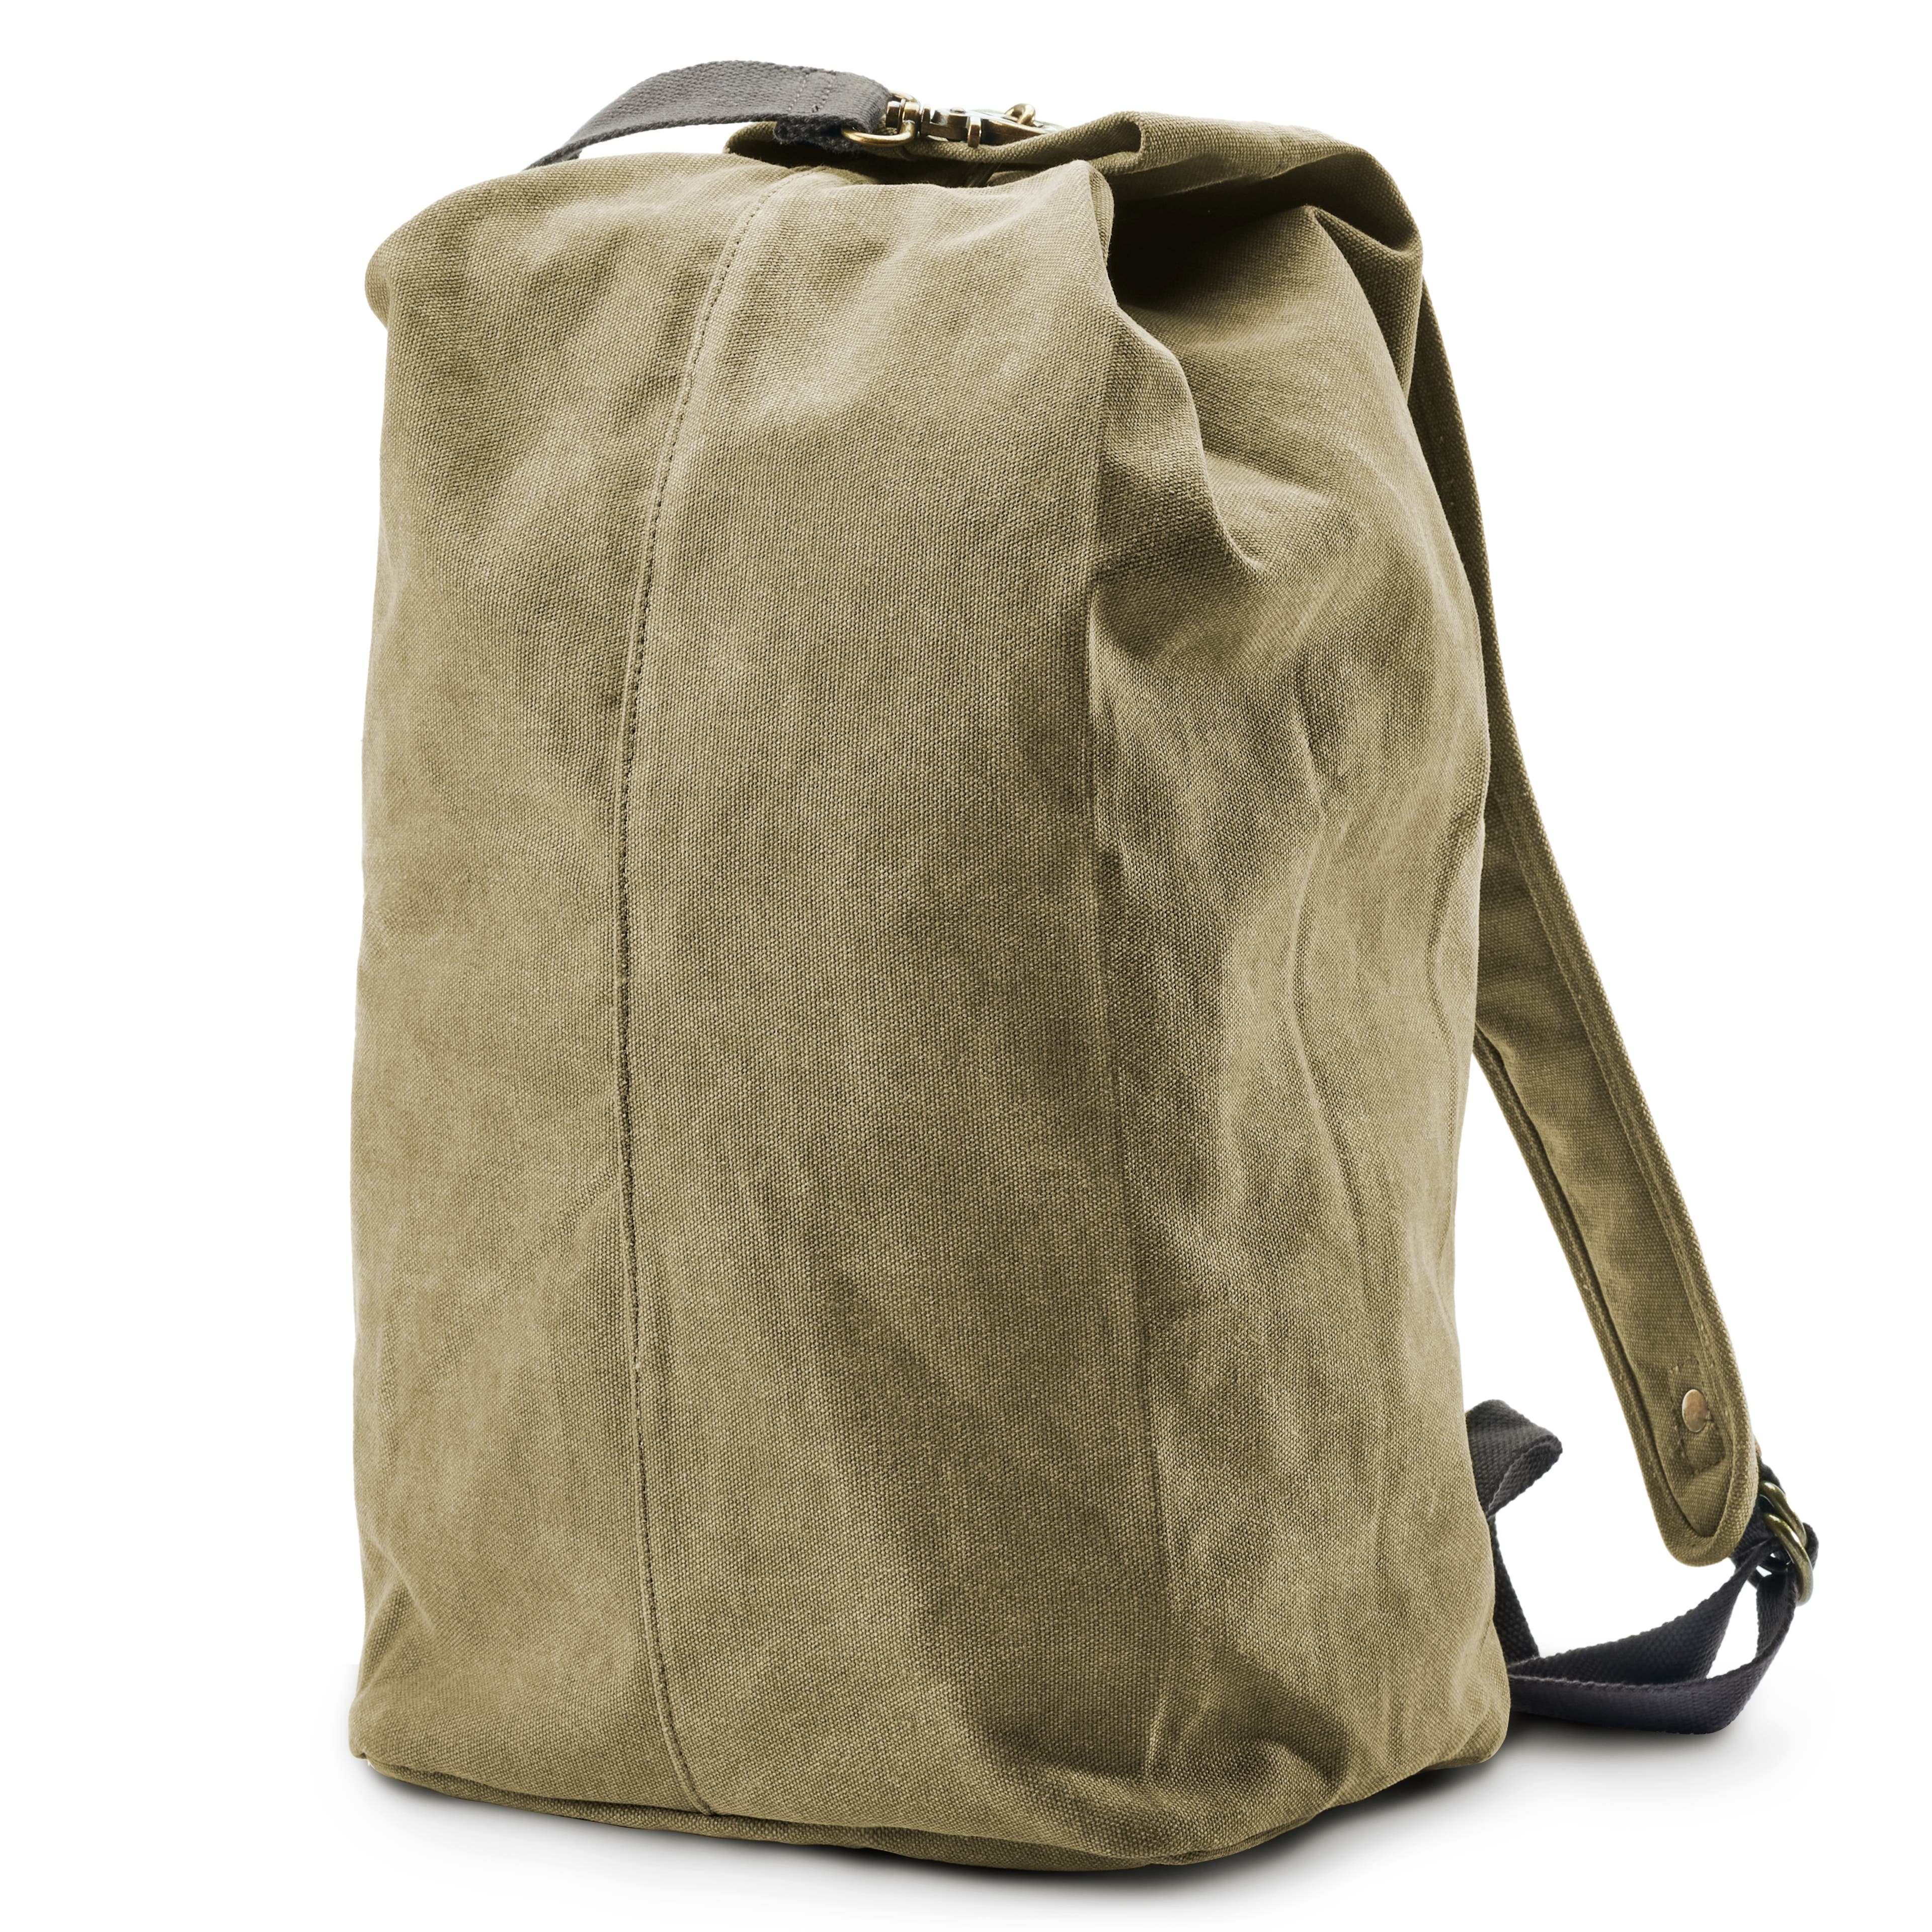 Vintage Army Πράσινο Σακίδιο Πλάτης (Backpack) από Καμβά